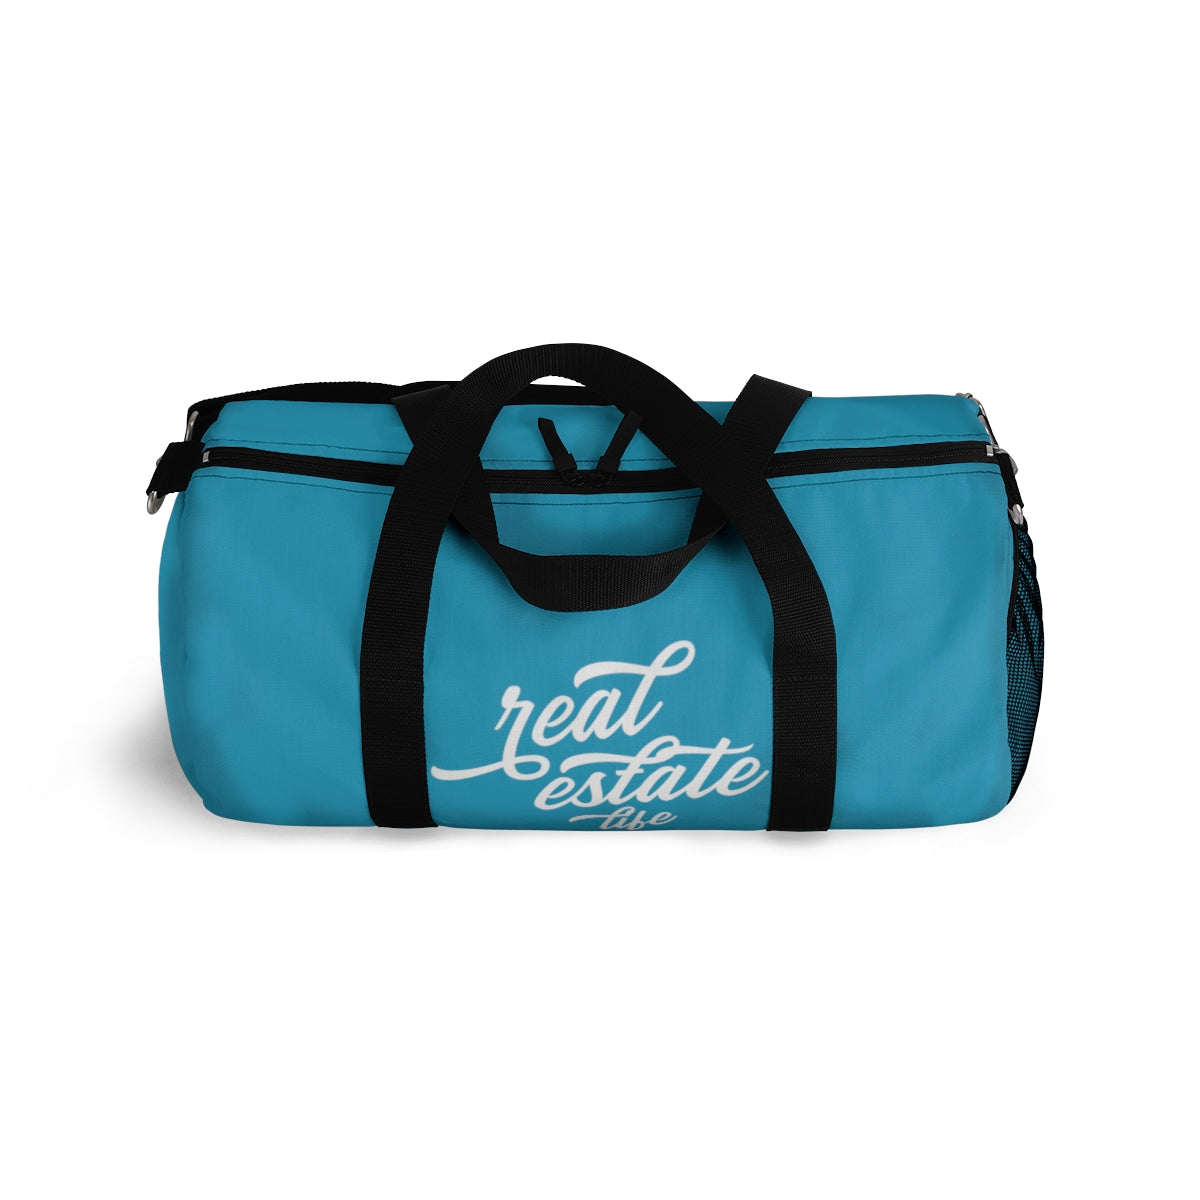 Duffel Bag - Real Estate Life - Turquoise